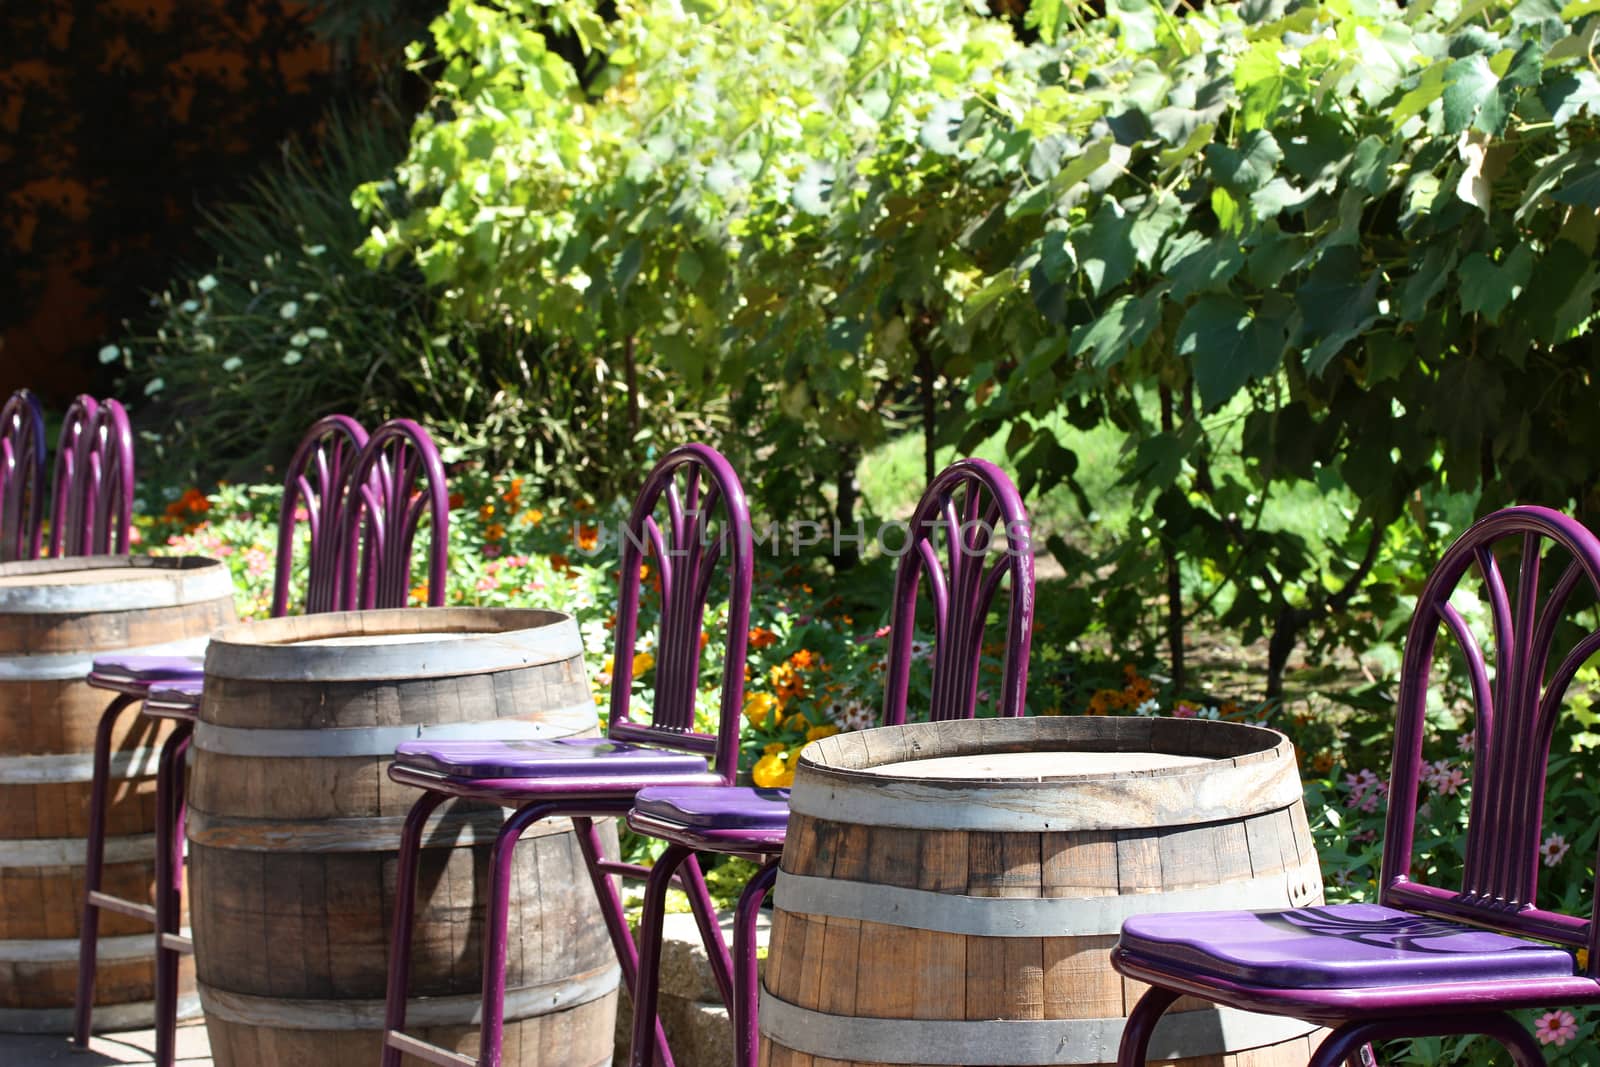 Outdoor wine tasting setting on old barrels